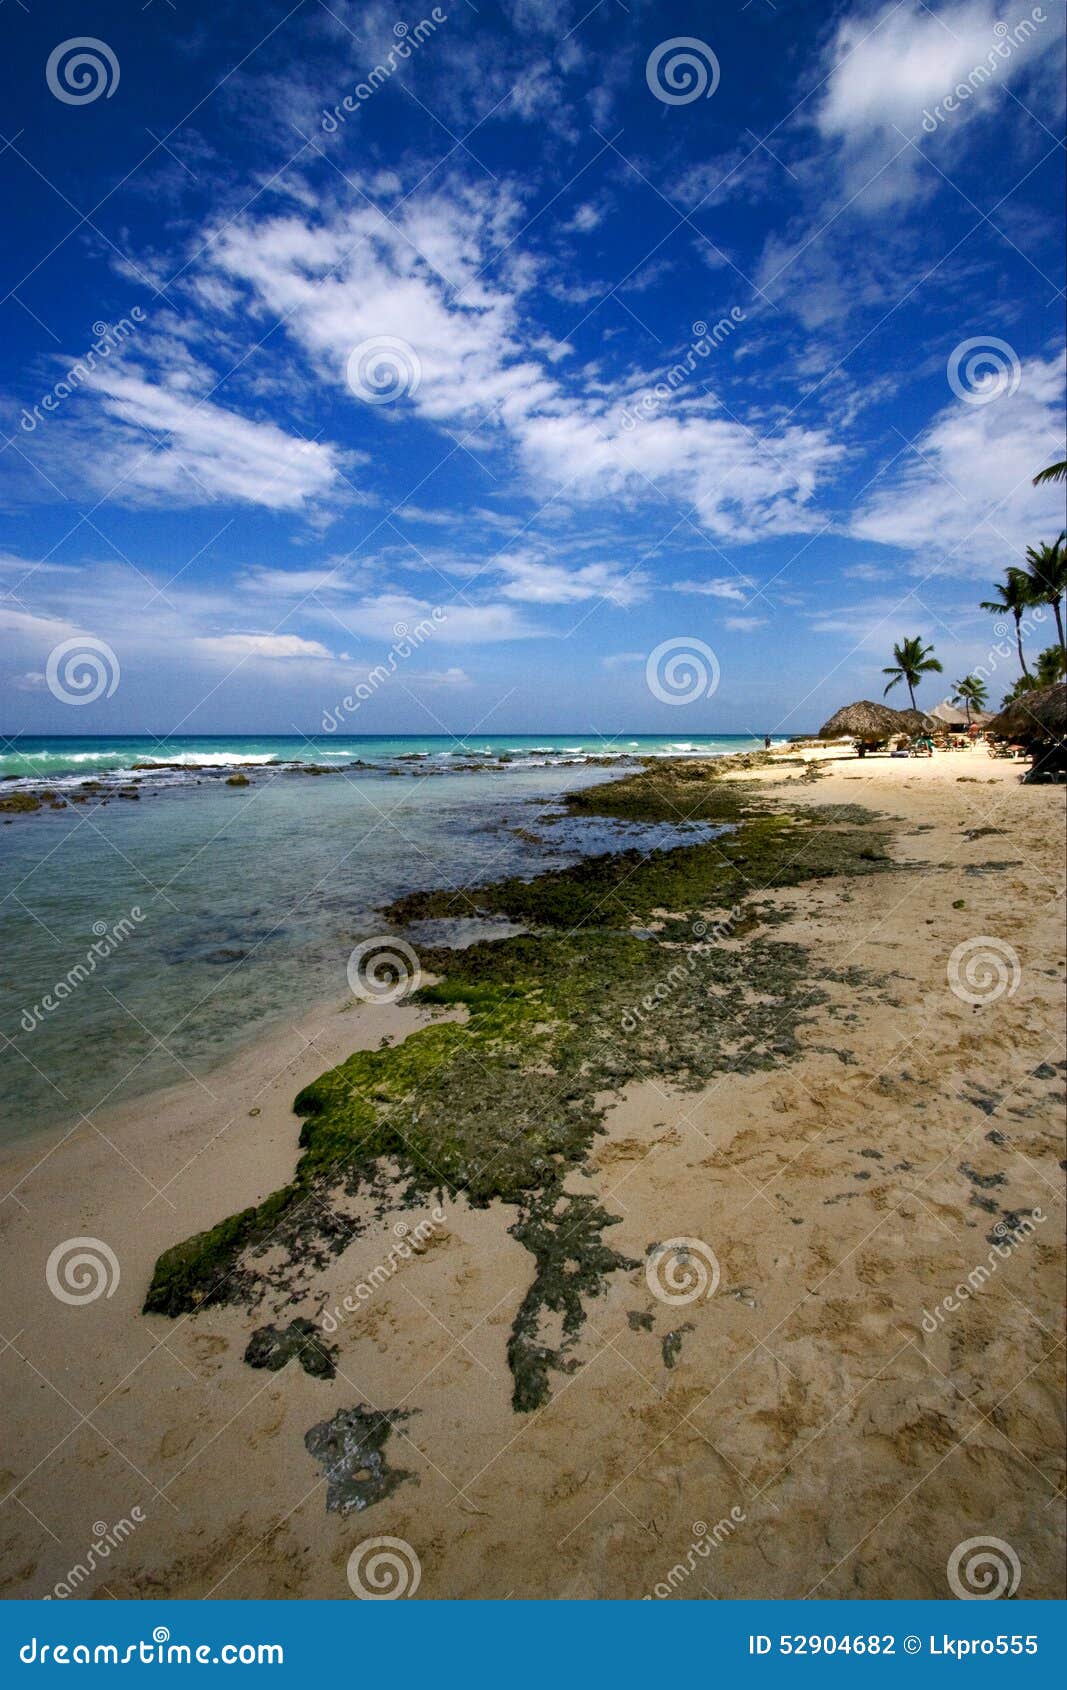 beach rock and stone cabin and palm in republica dominicana